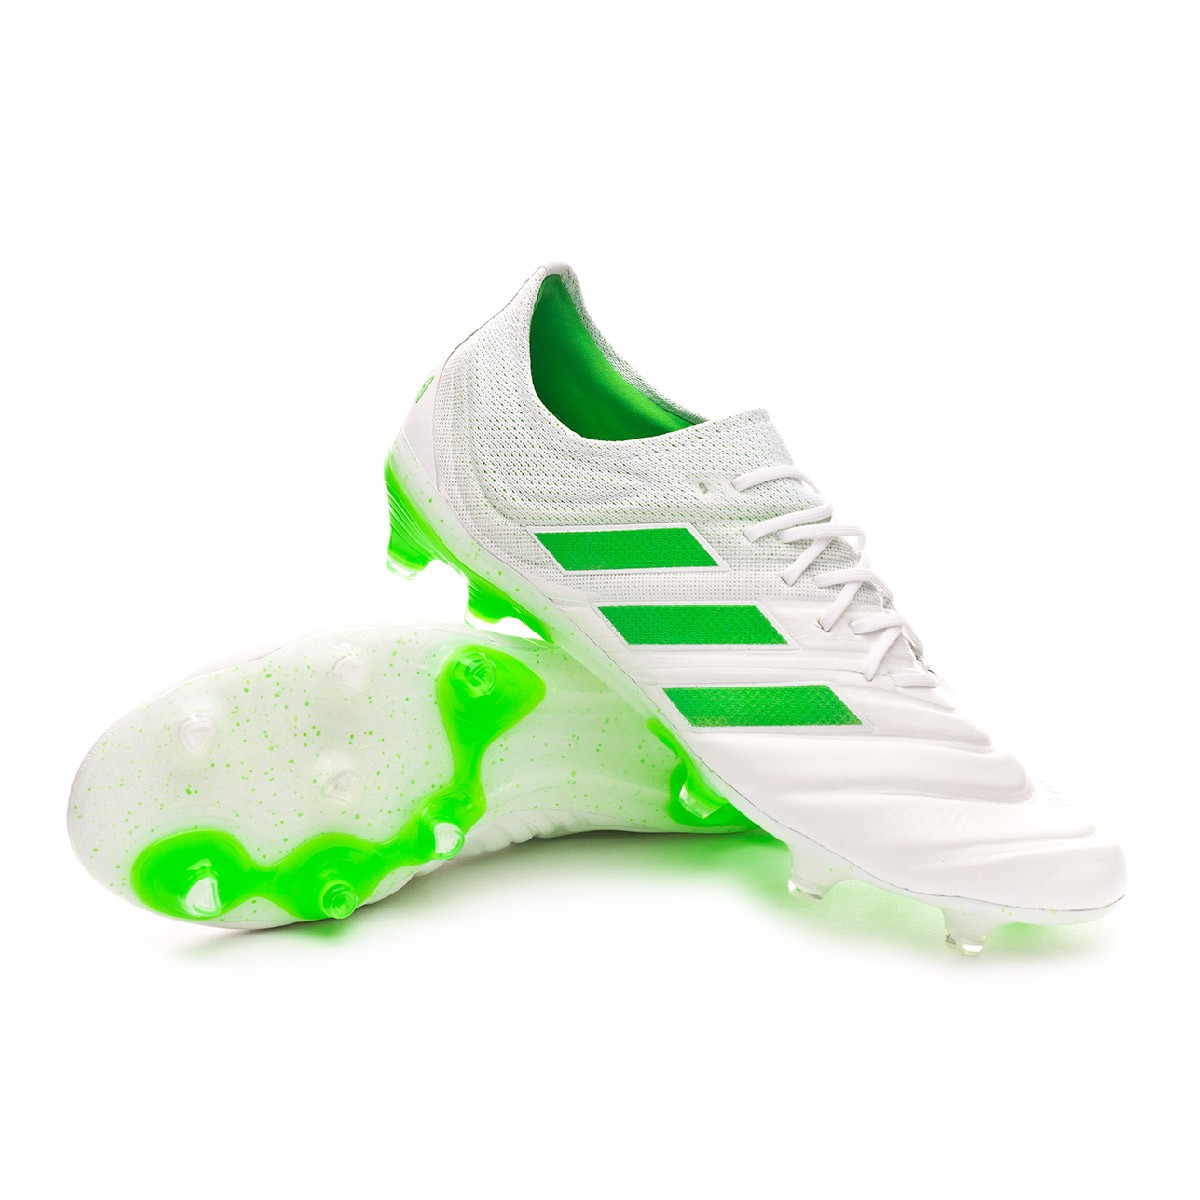 adidas lime green football boots